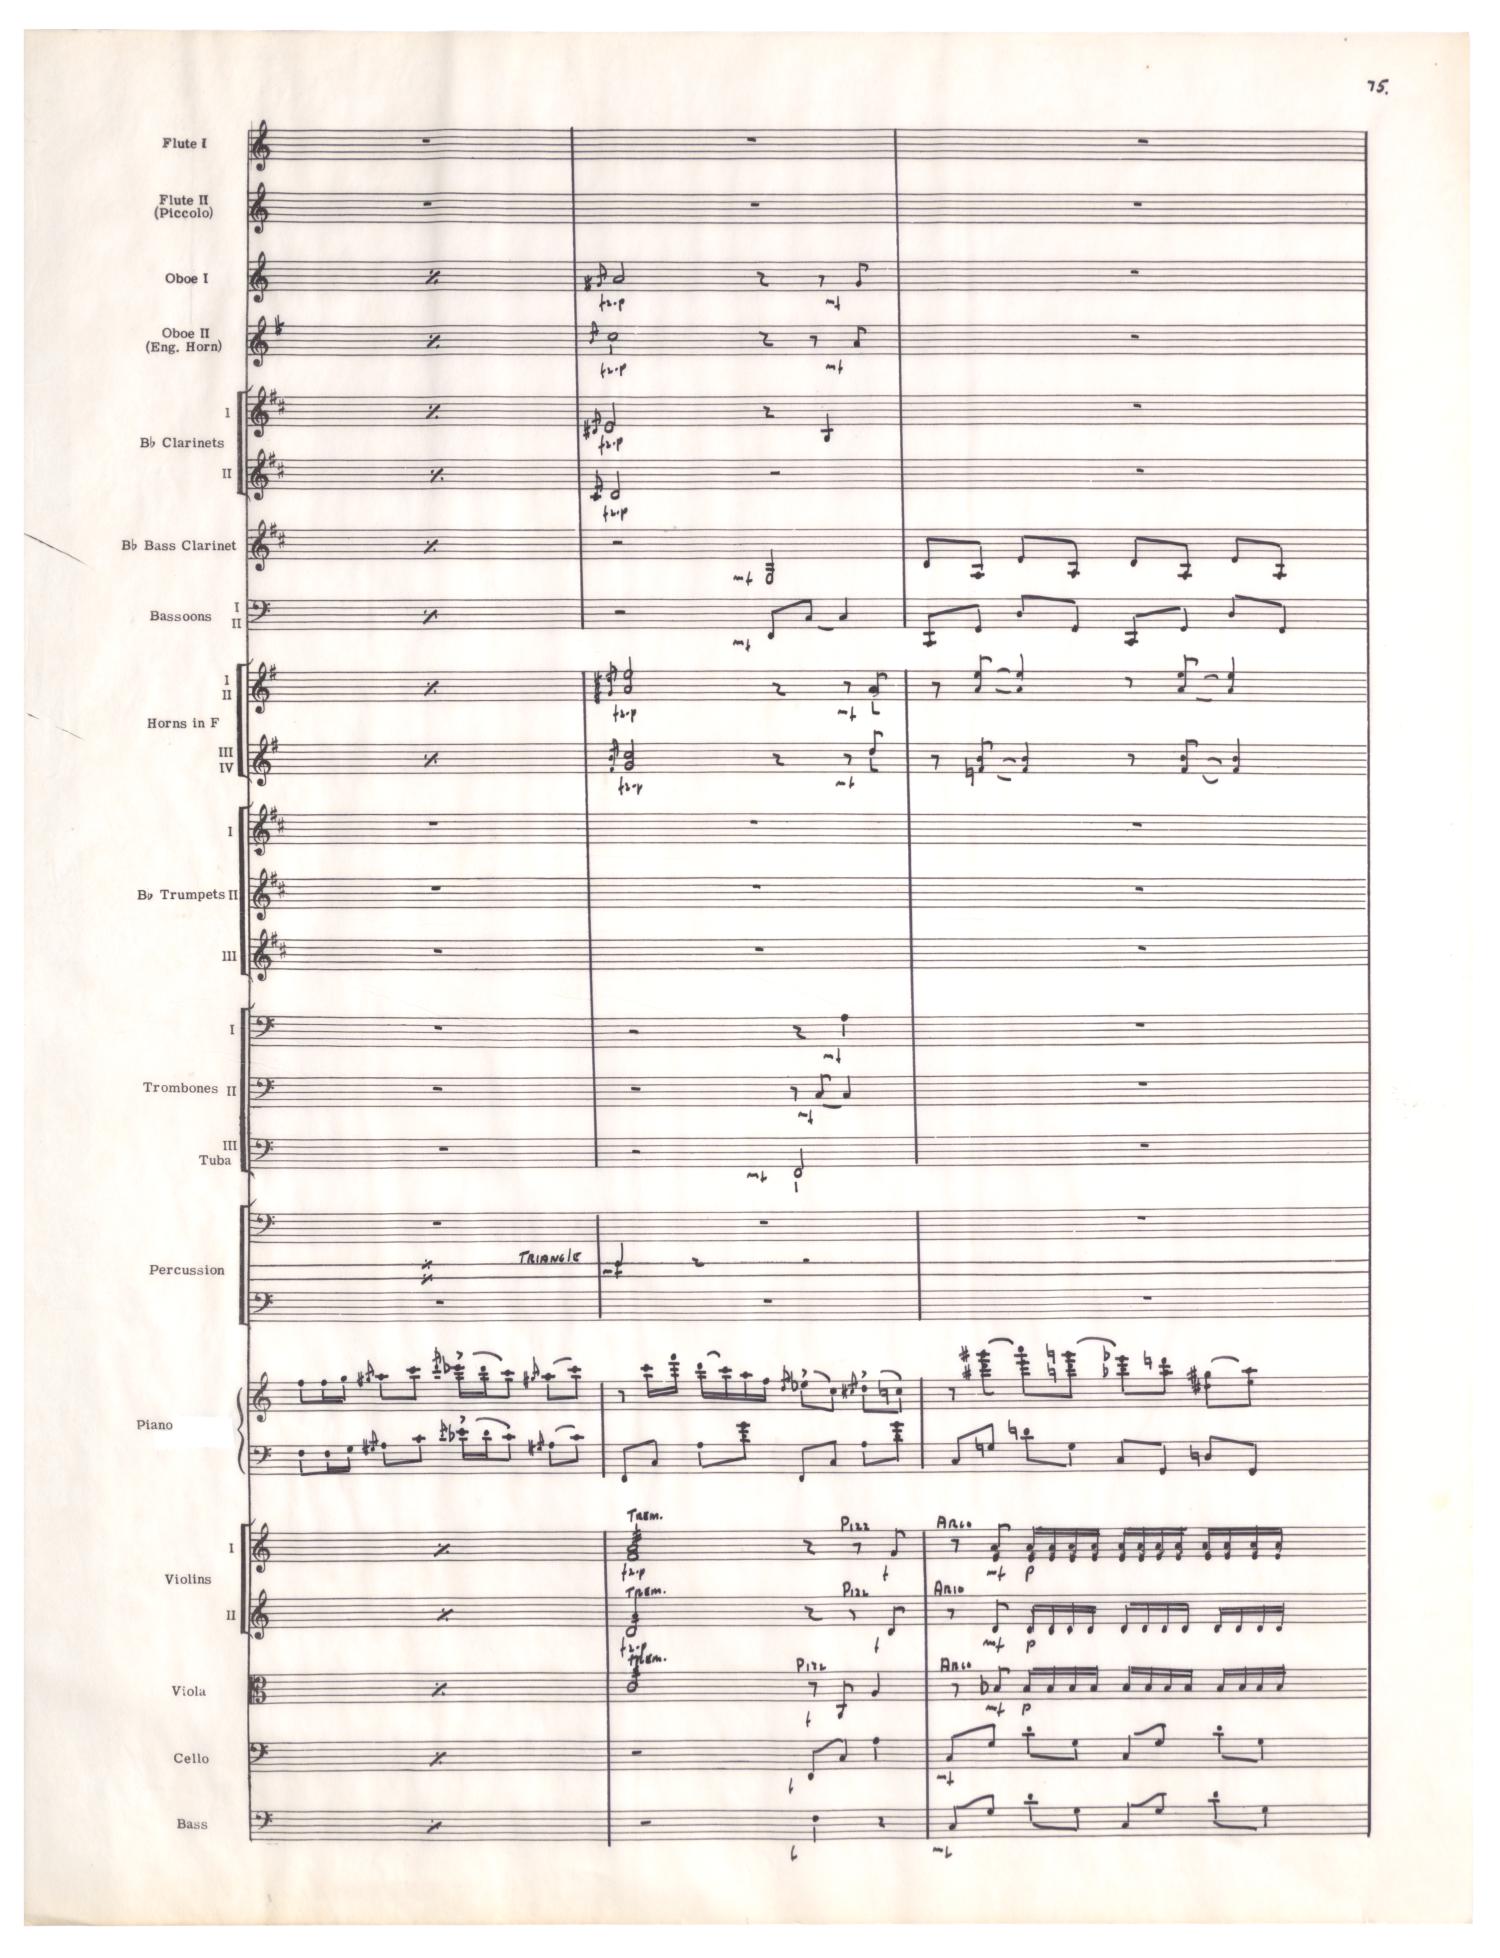 The encore concerto for piano and orchestra
                                                
                                                    75
                                                